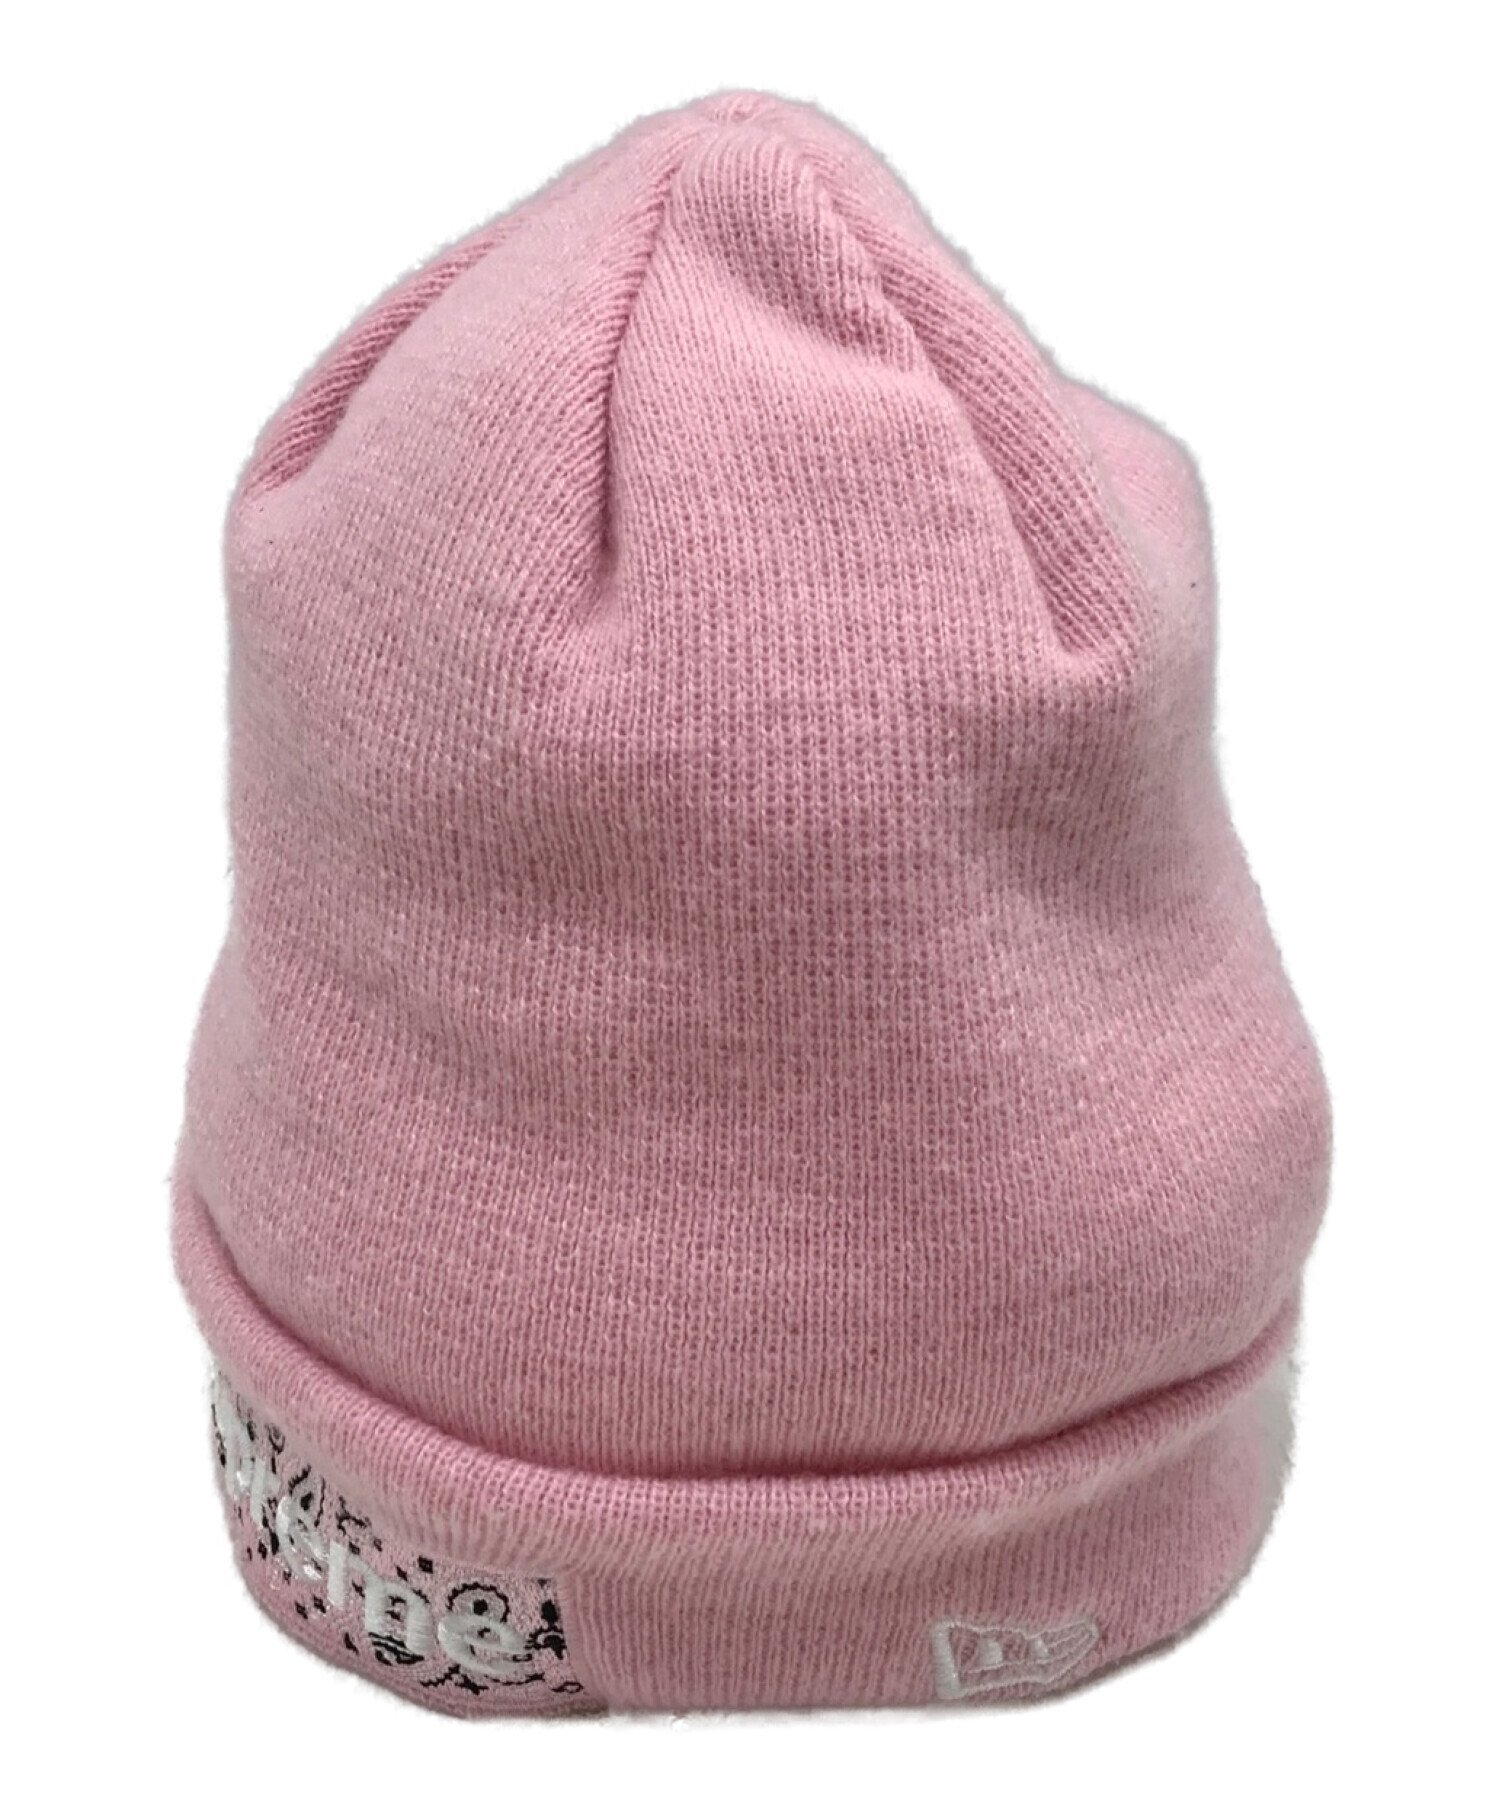 SUPREME×NEWERA (シュプリーム × ニューエラ) コラボニット帽 ピンク サイズ:記載なし